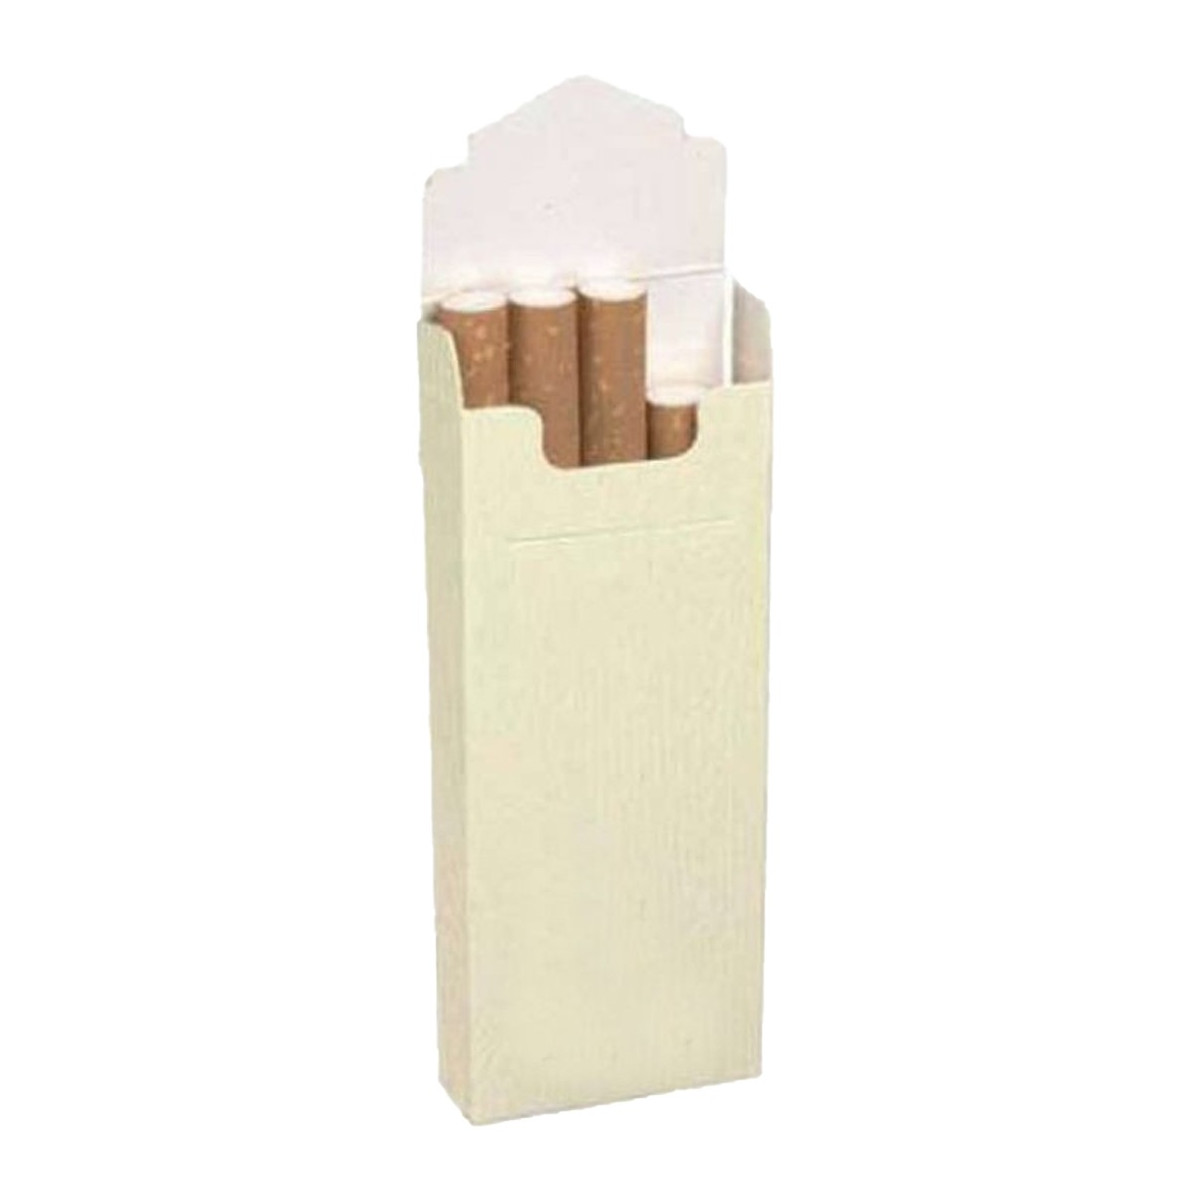 Pacchetti di tabacco per gli ospiti